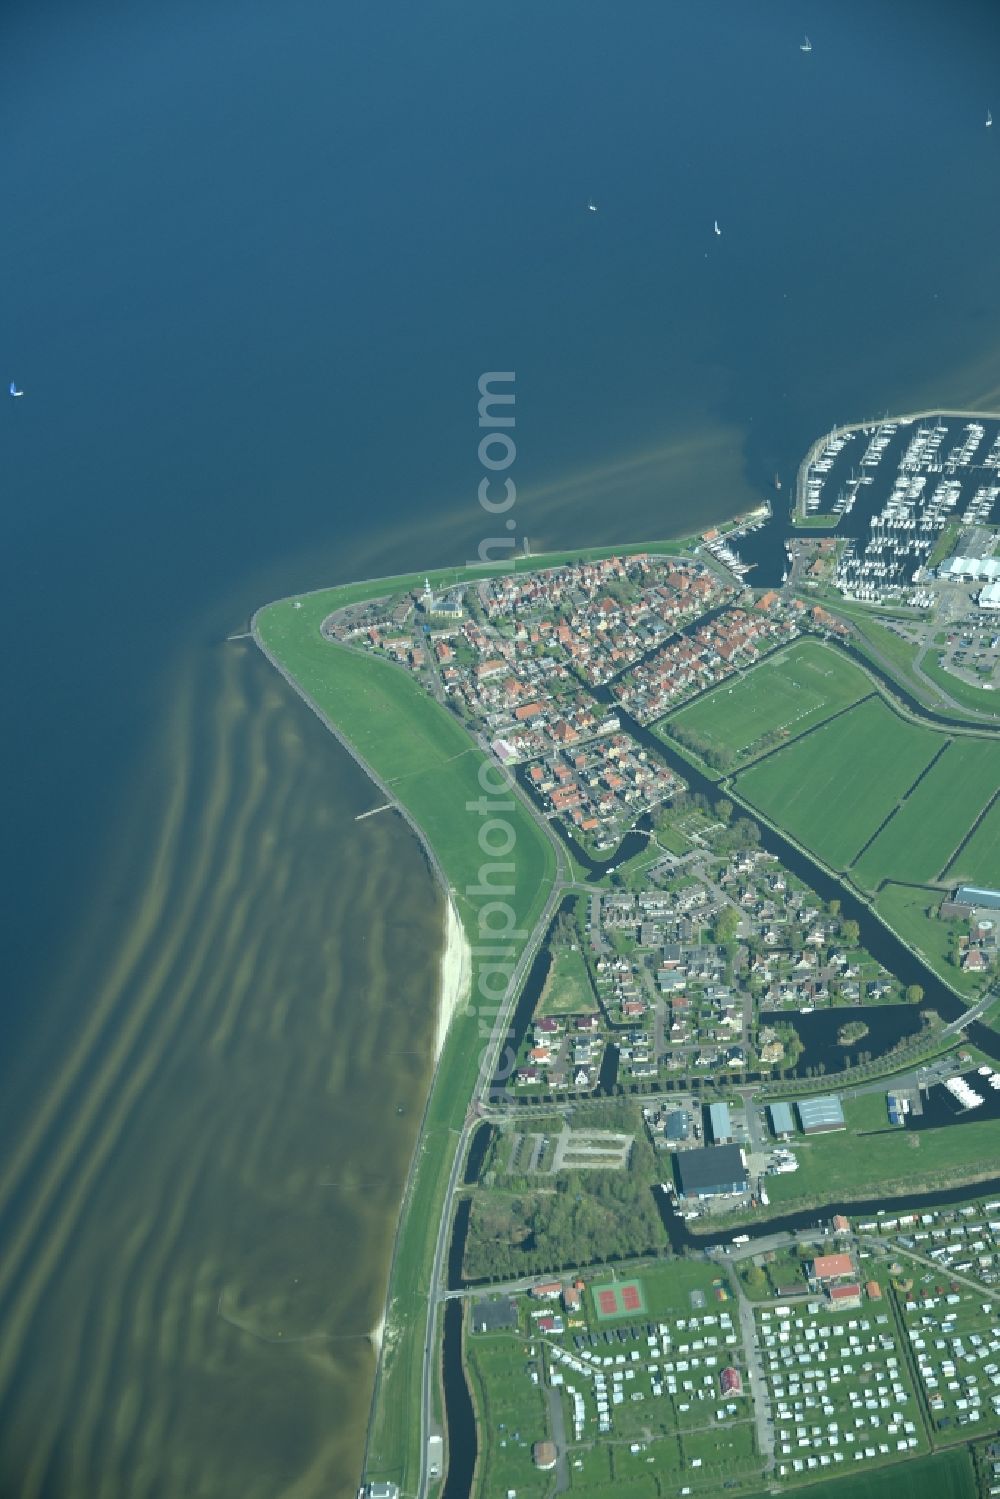 Aerial photograph Hindeloopen - Village view of Hindeloopen on the edge of the IJsselmeer in Friesland, Netherlands